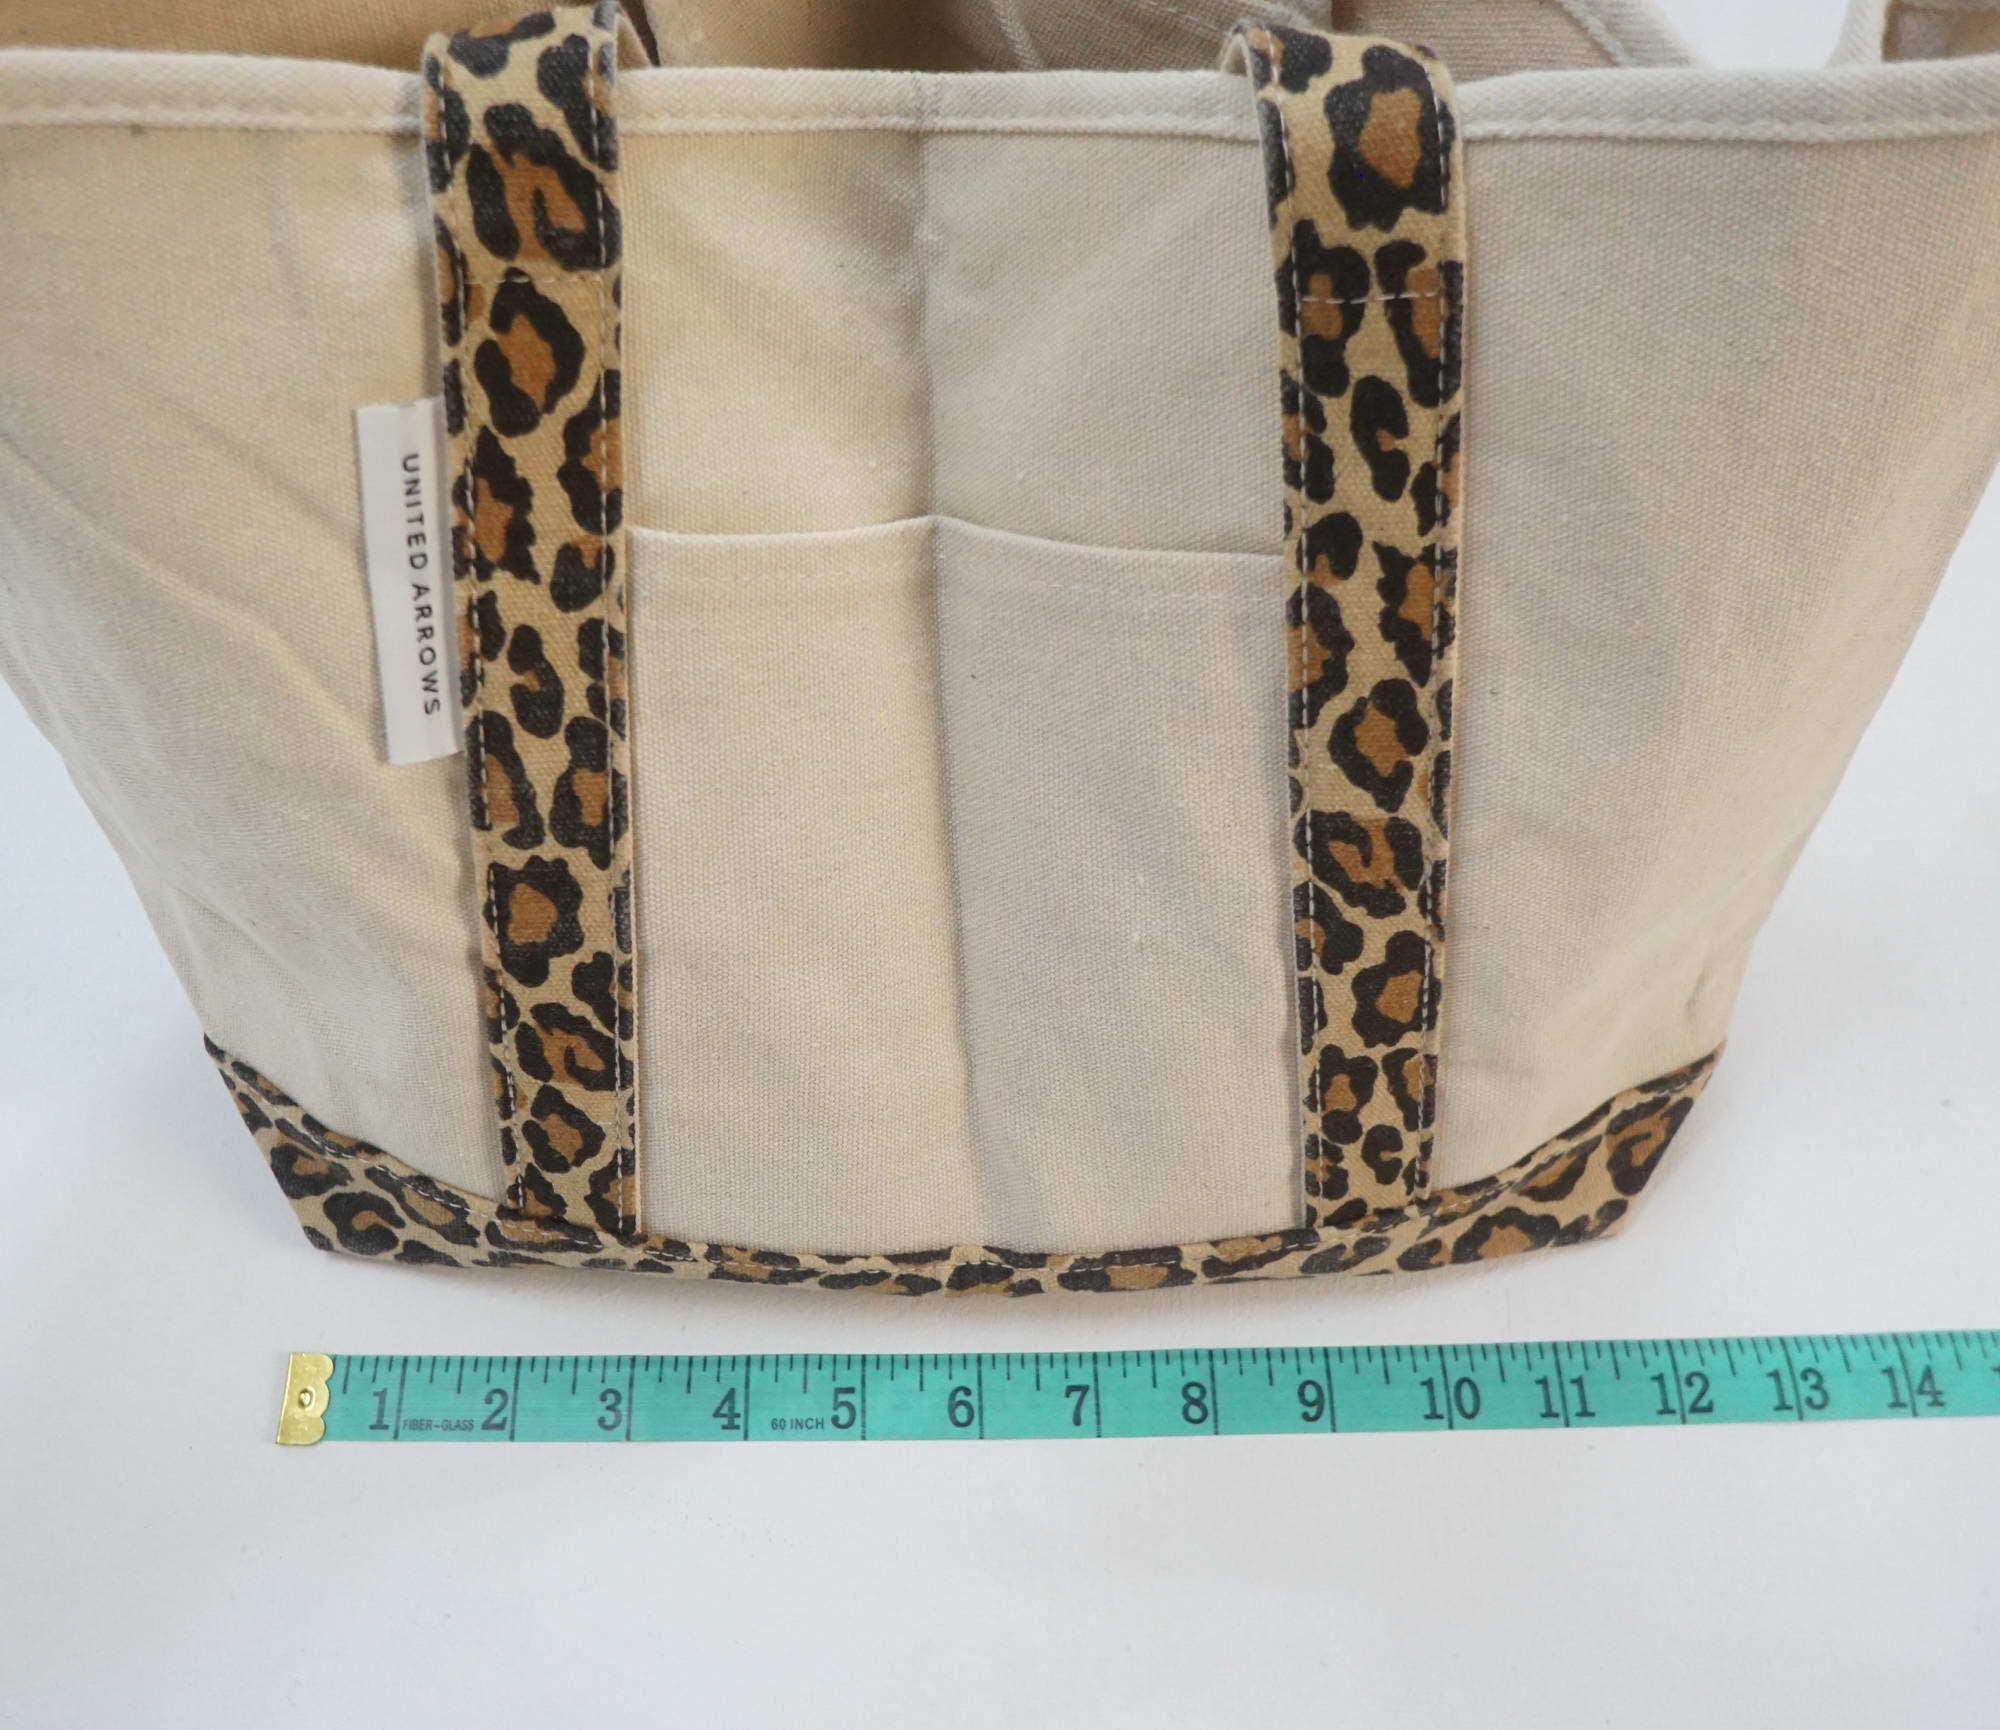 UNITED ARROWS Leopard Printed Tote Bag - 9